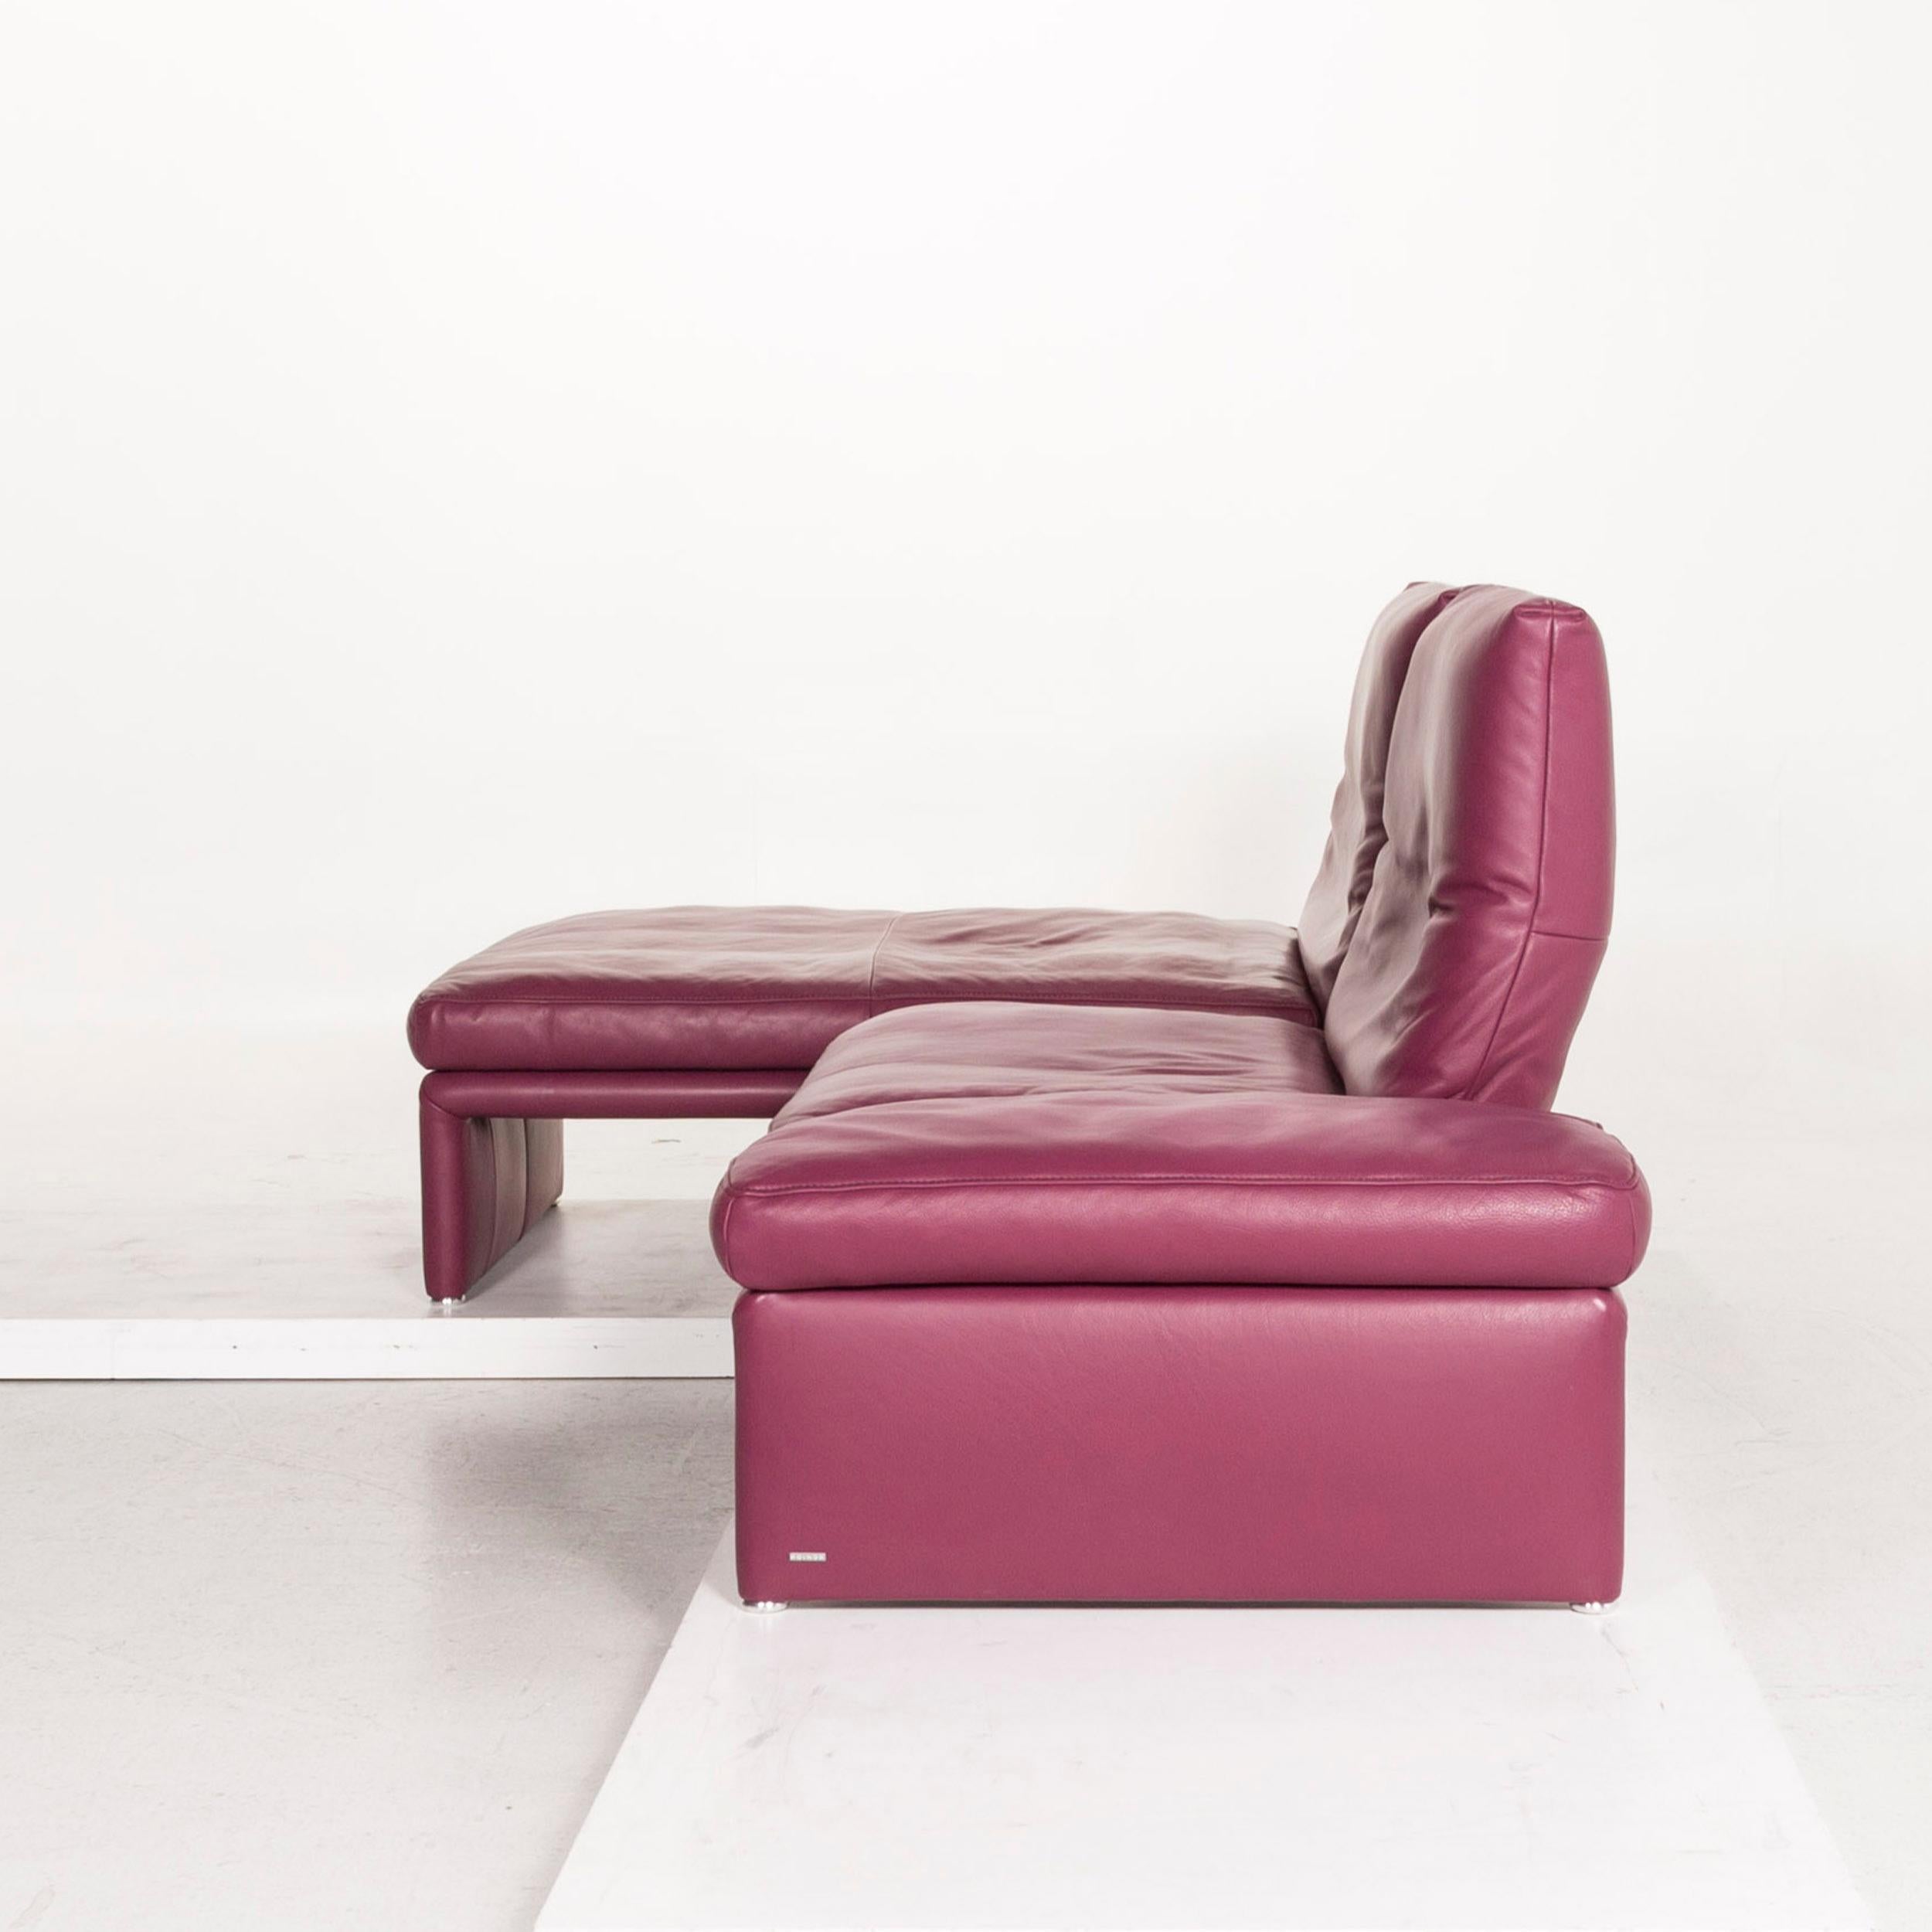 Koinor Raoul Leather Corner Sofa Purple Sofa Function Couch 4